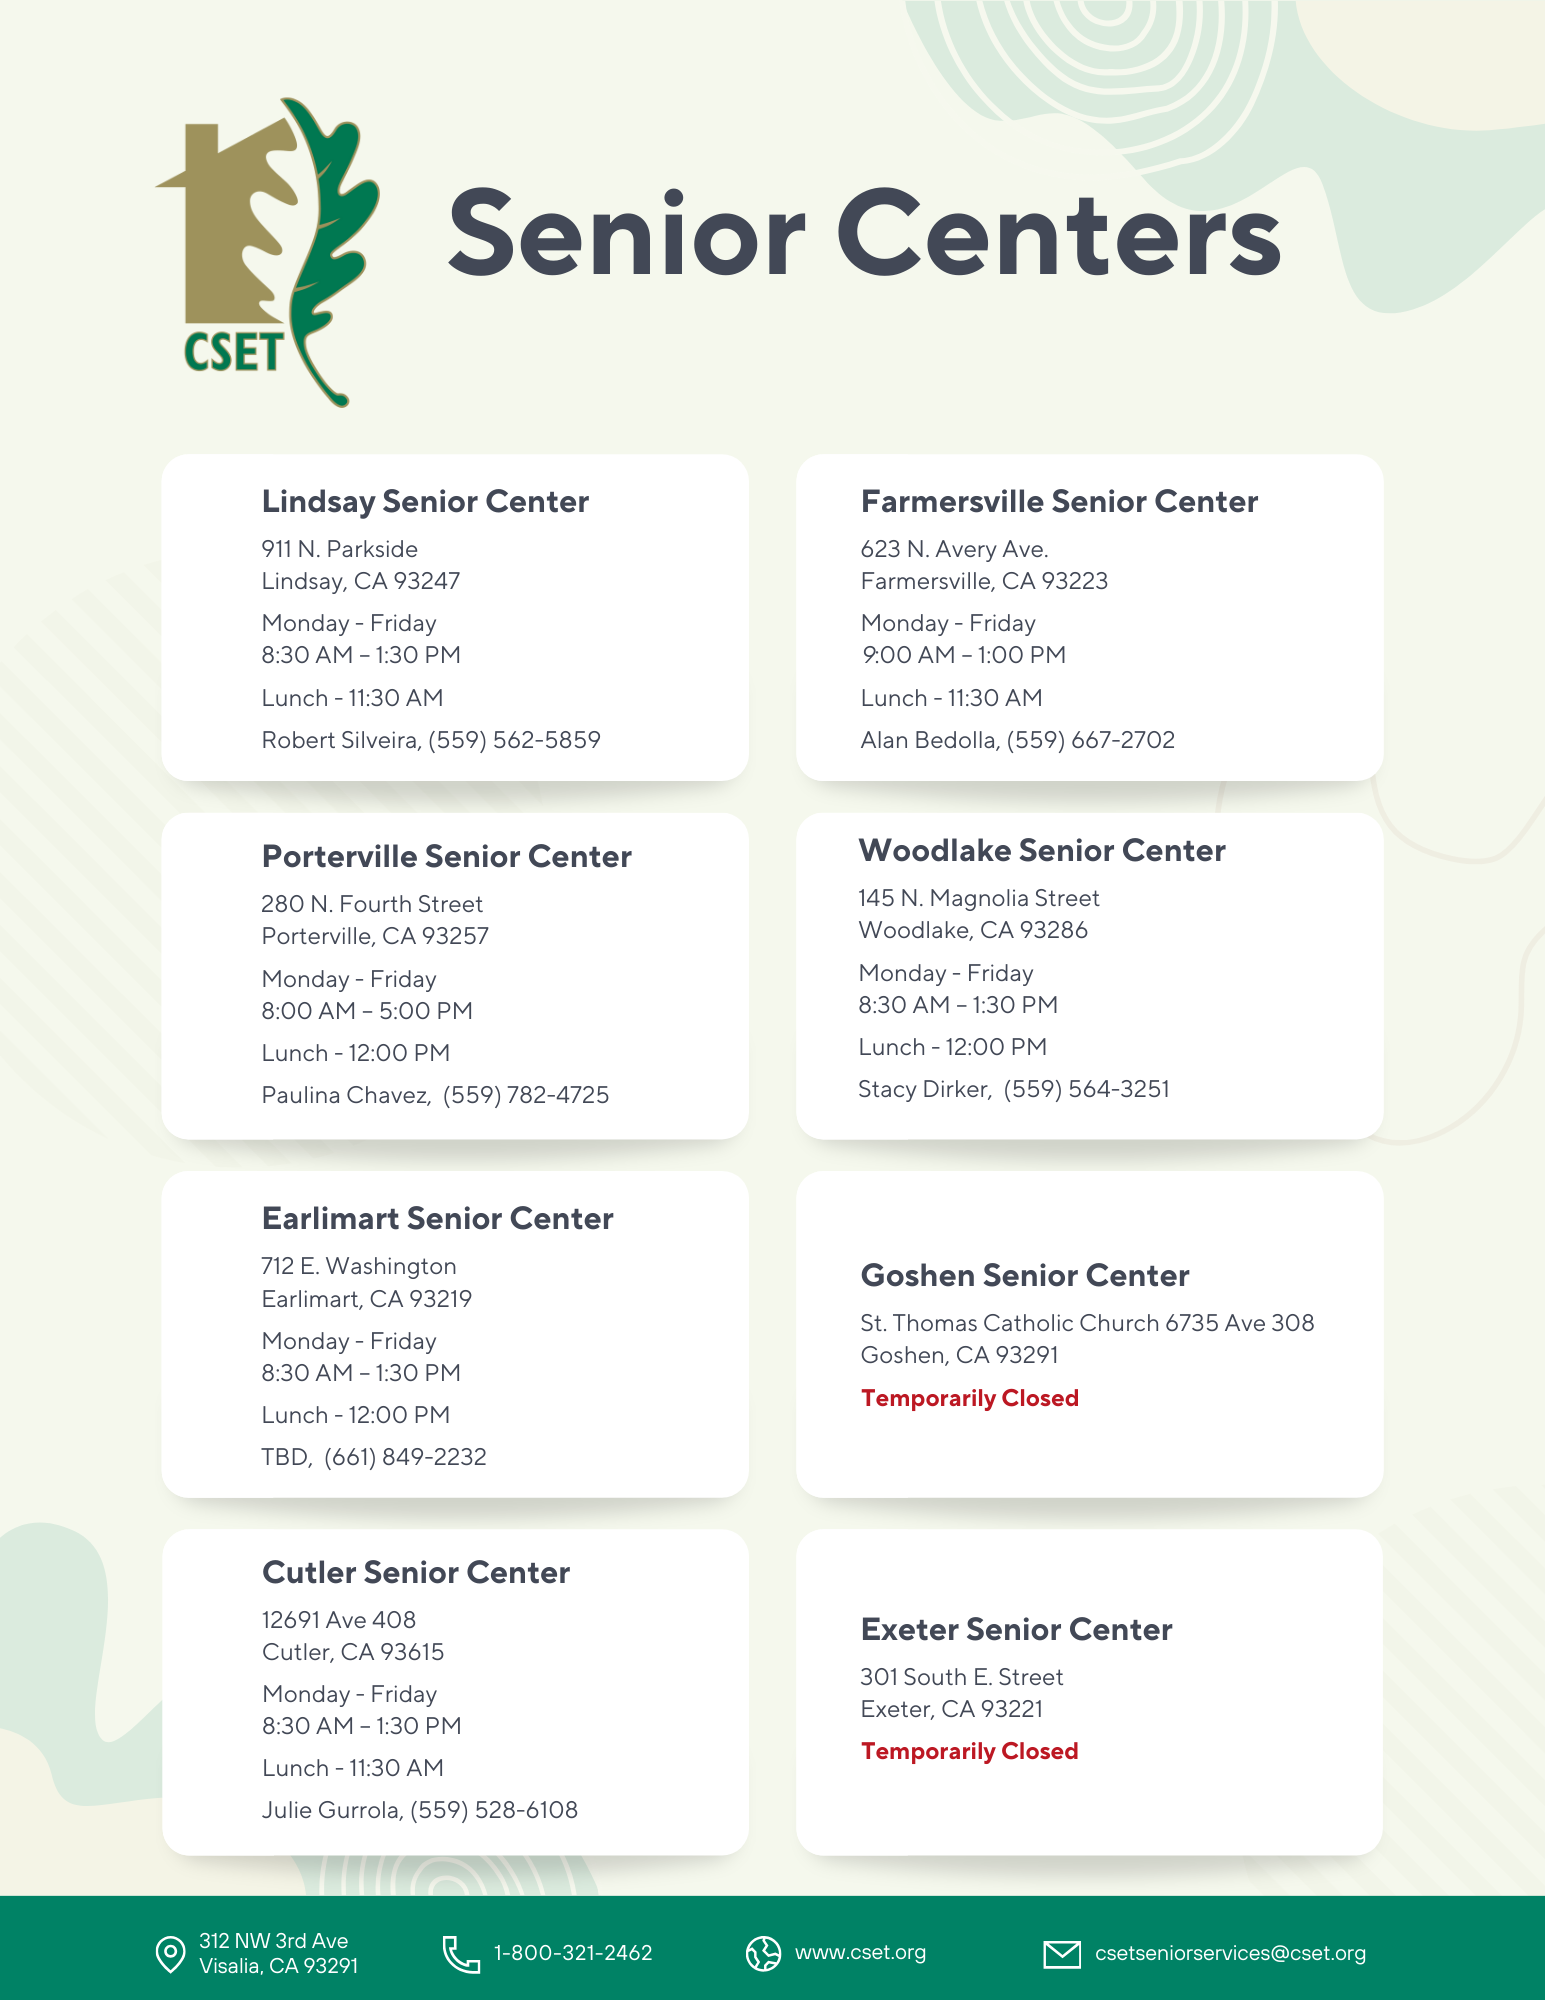 CSET Senior Centers Directory (English).png